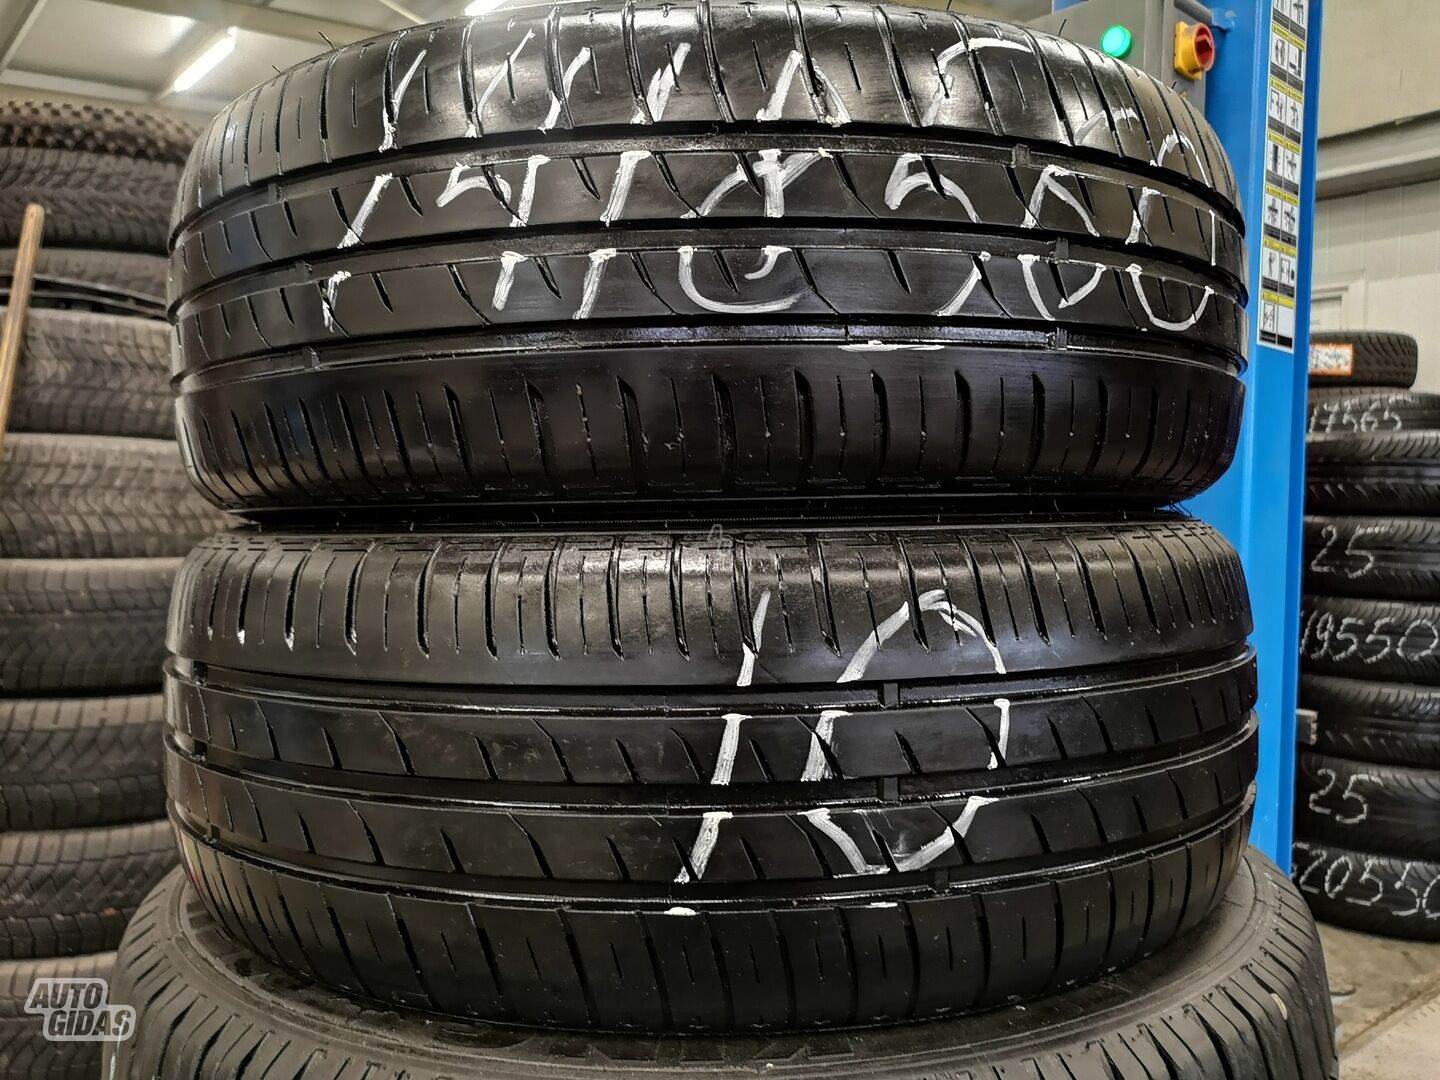 R14 summer tyres passanger car